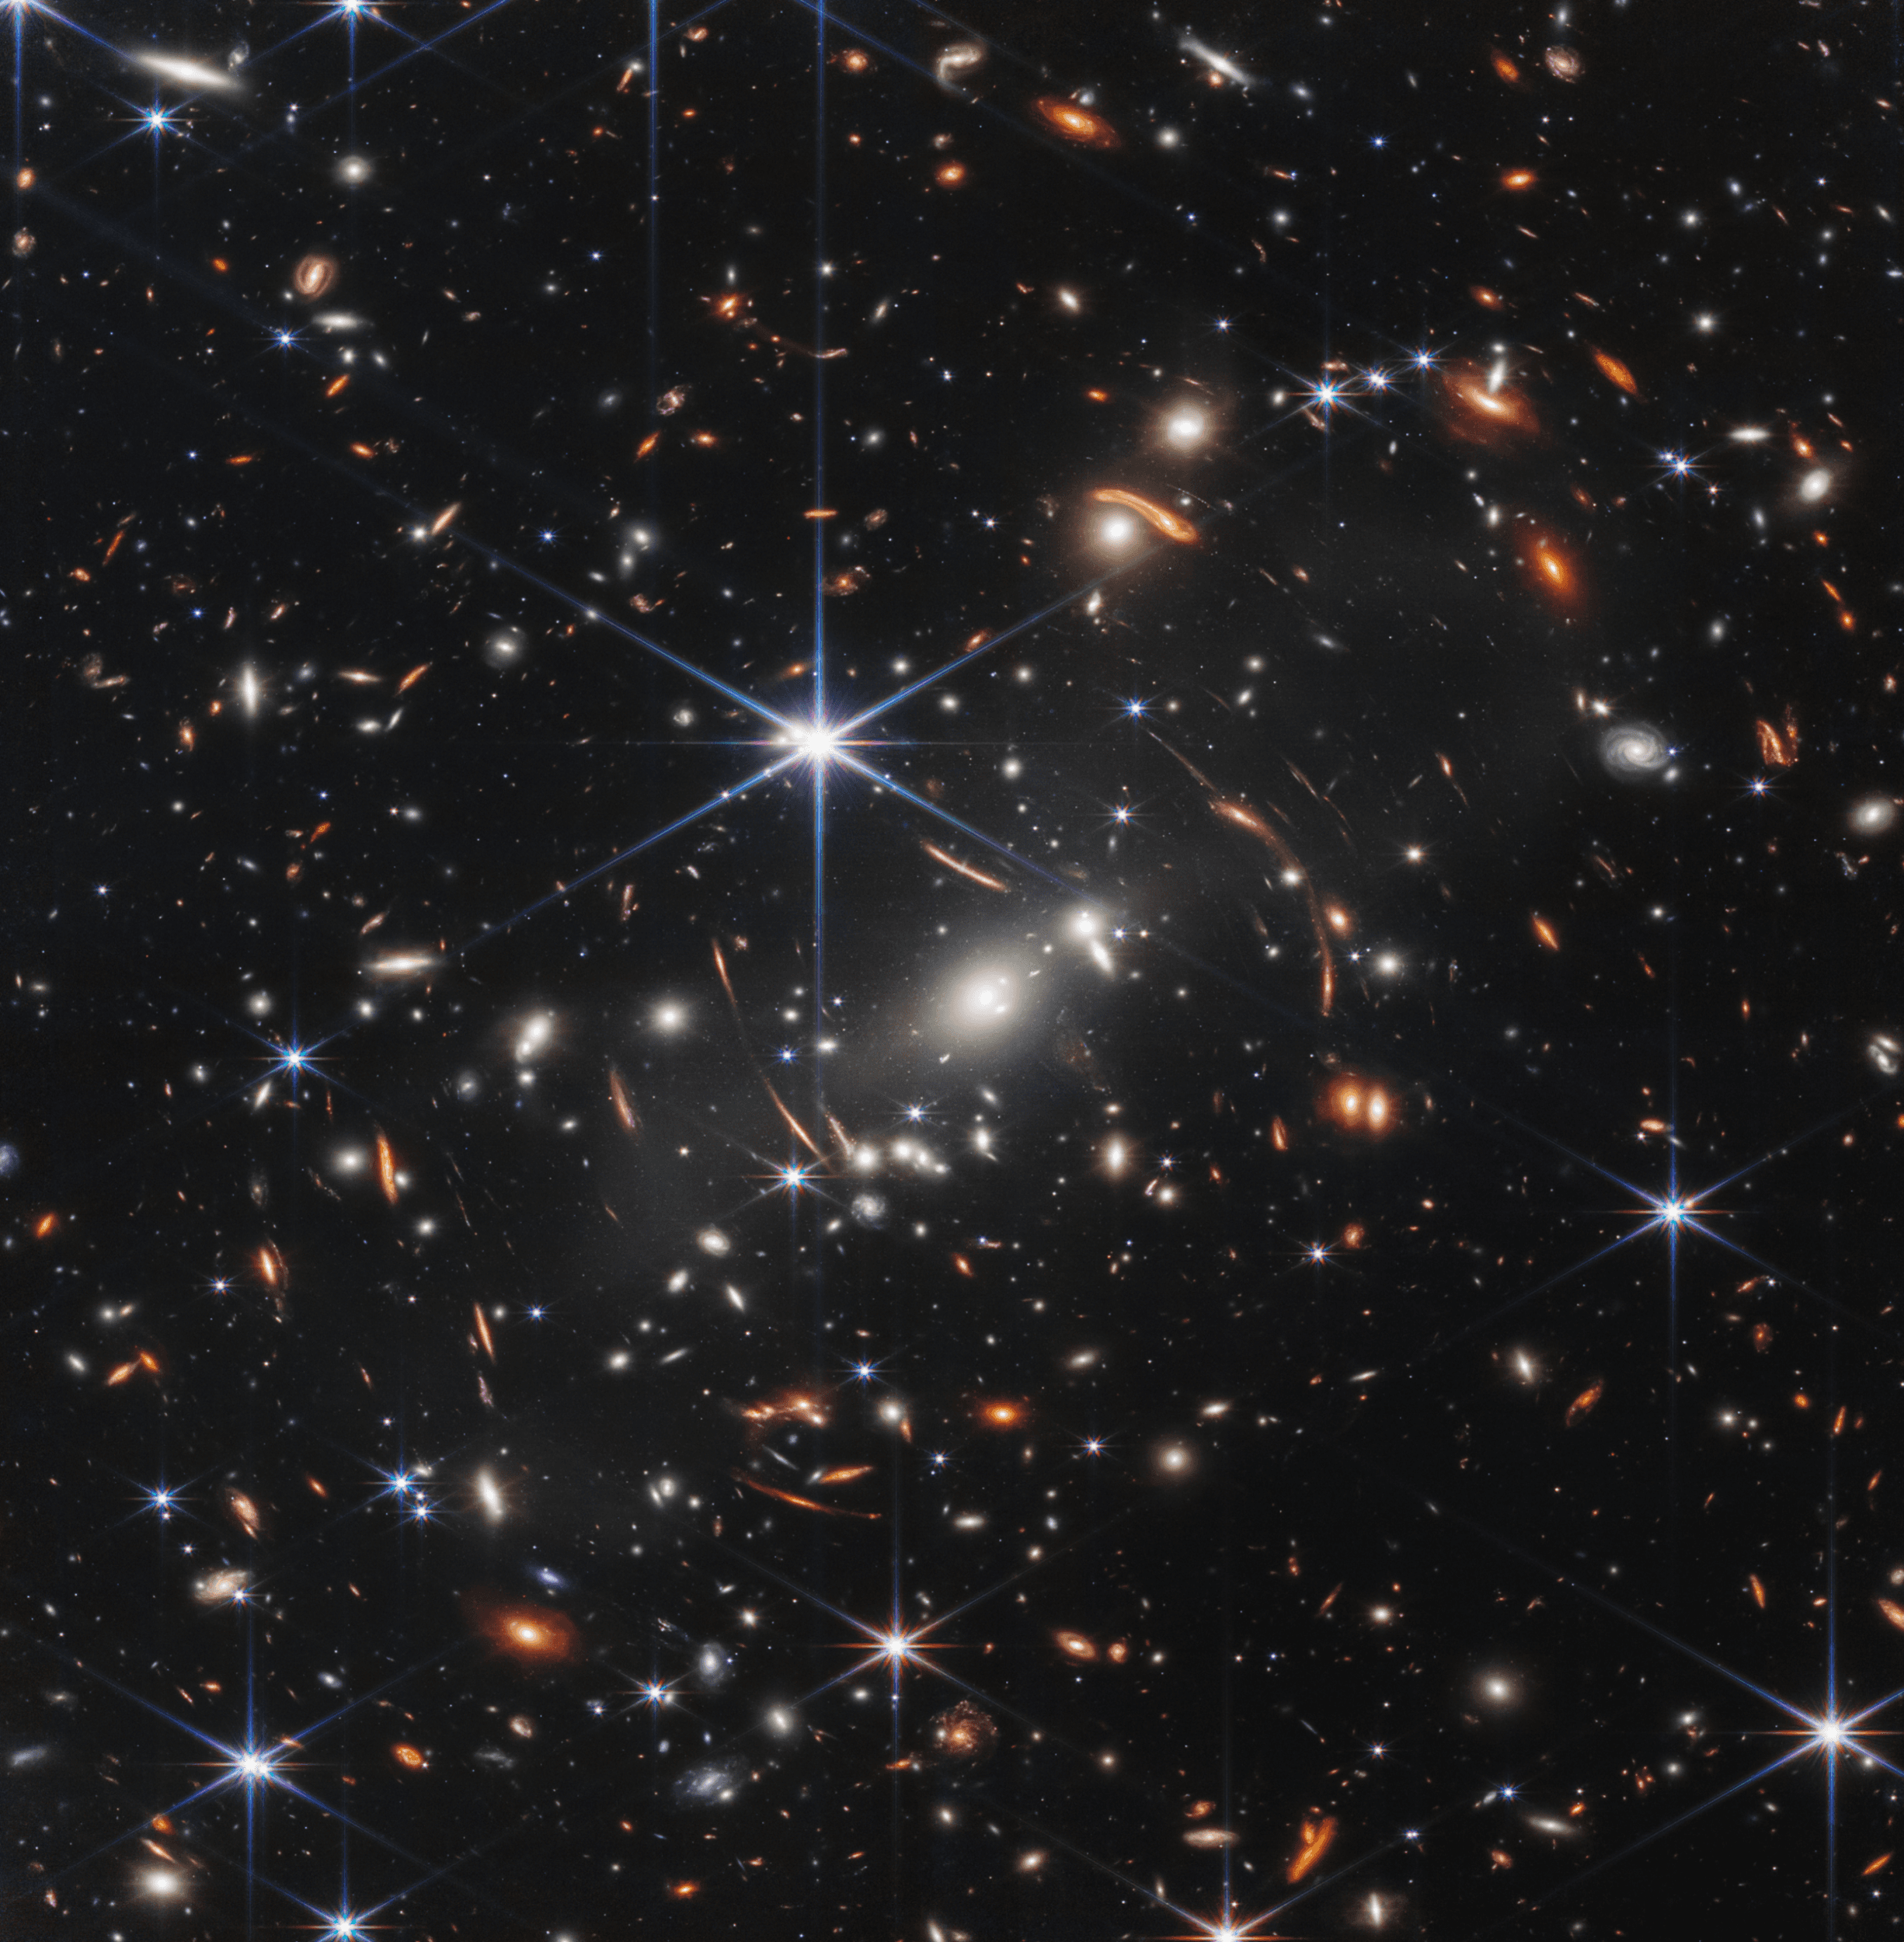 Webb Space Telescope image